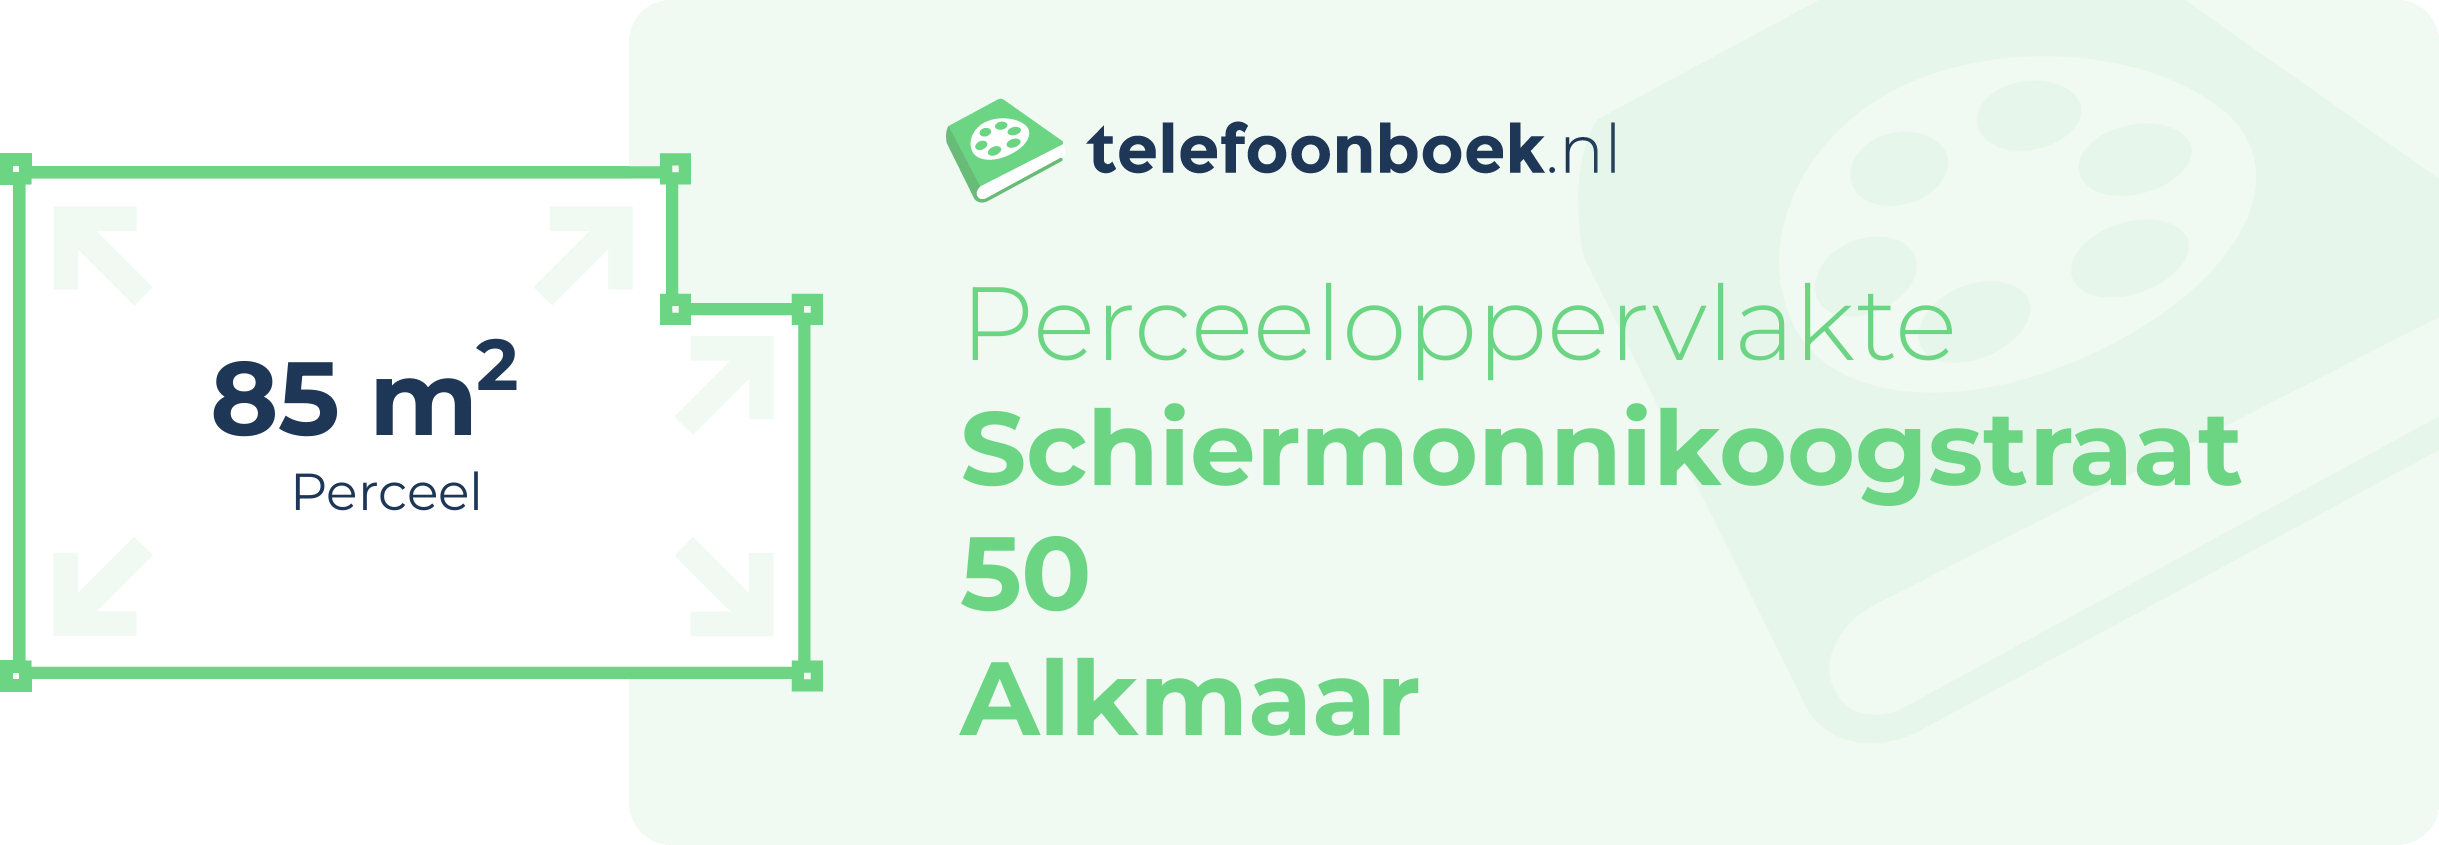 Perceeloppervlakte Schiermonnikoogstraat 50 Alkmaar